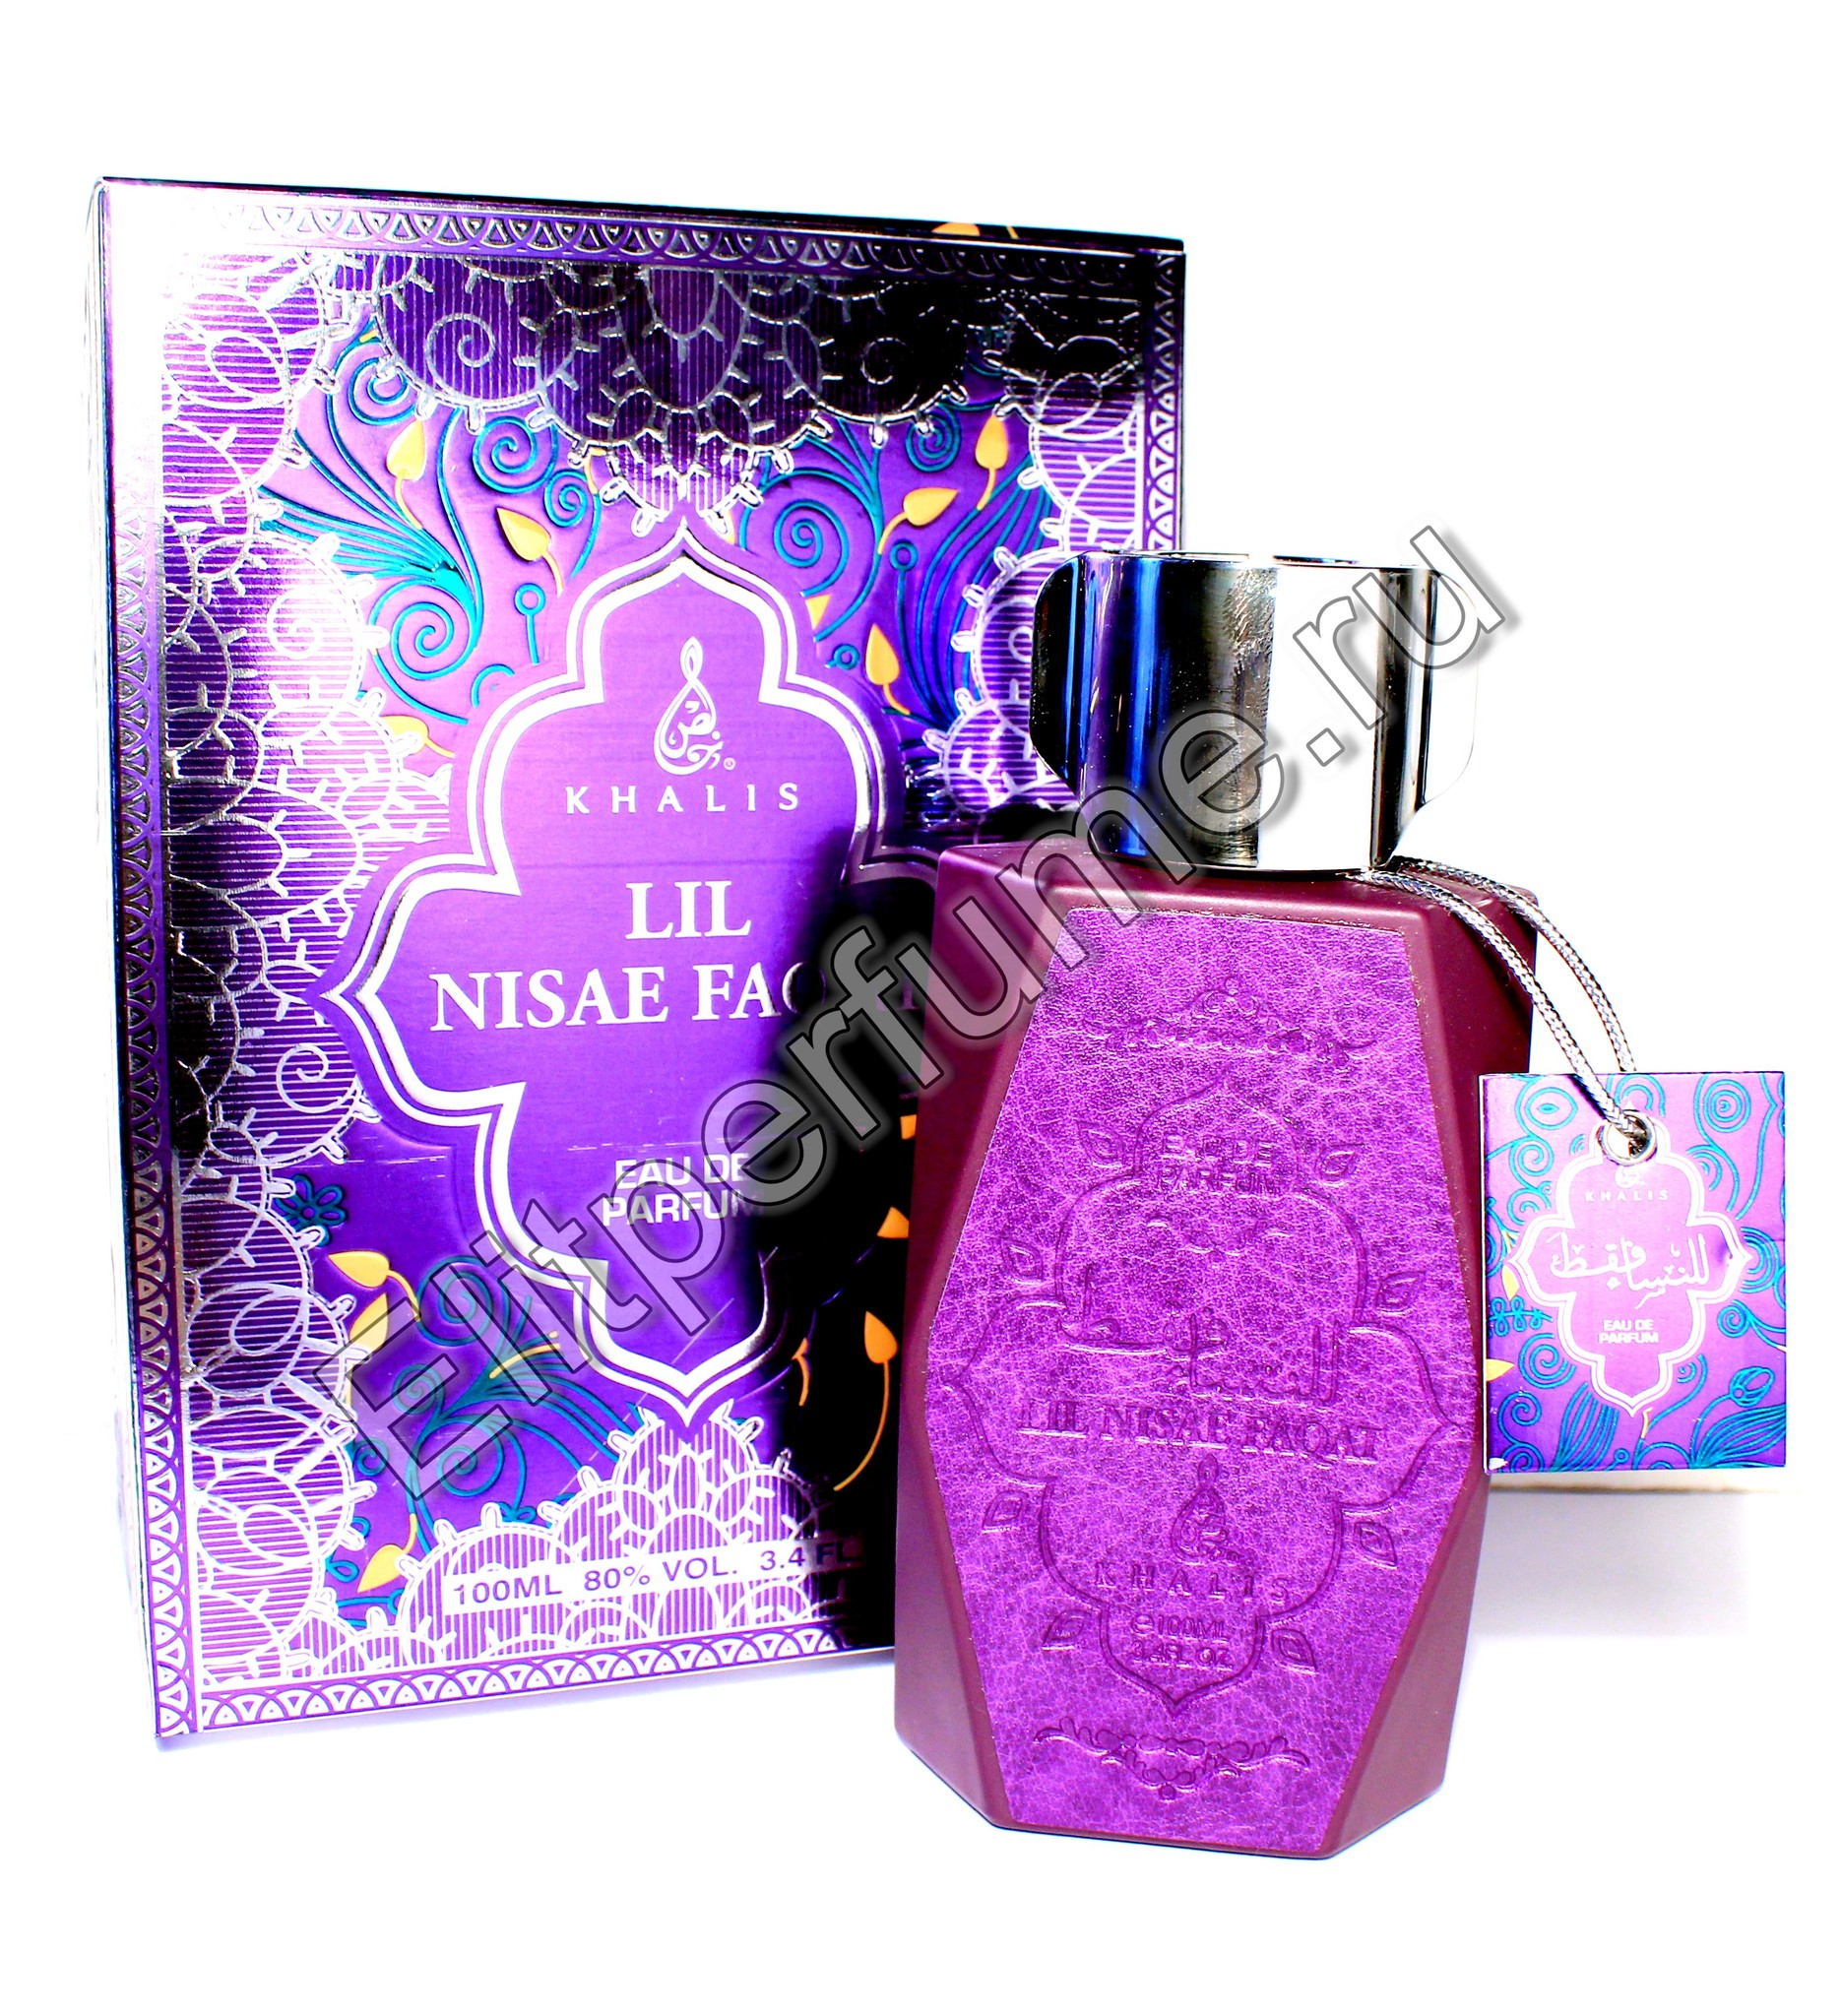 Lil Nisae Faqat Лиль Нисае Факат 100 мл спрей от Халис Khalis Perfumes